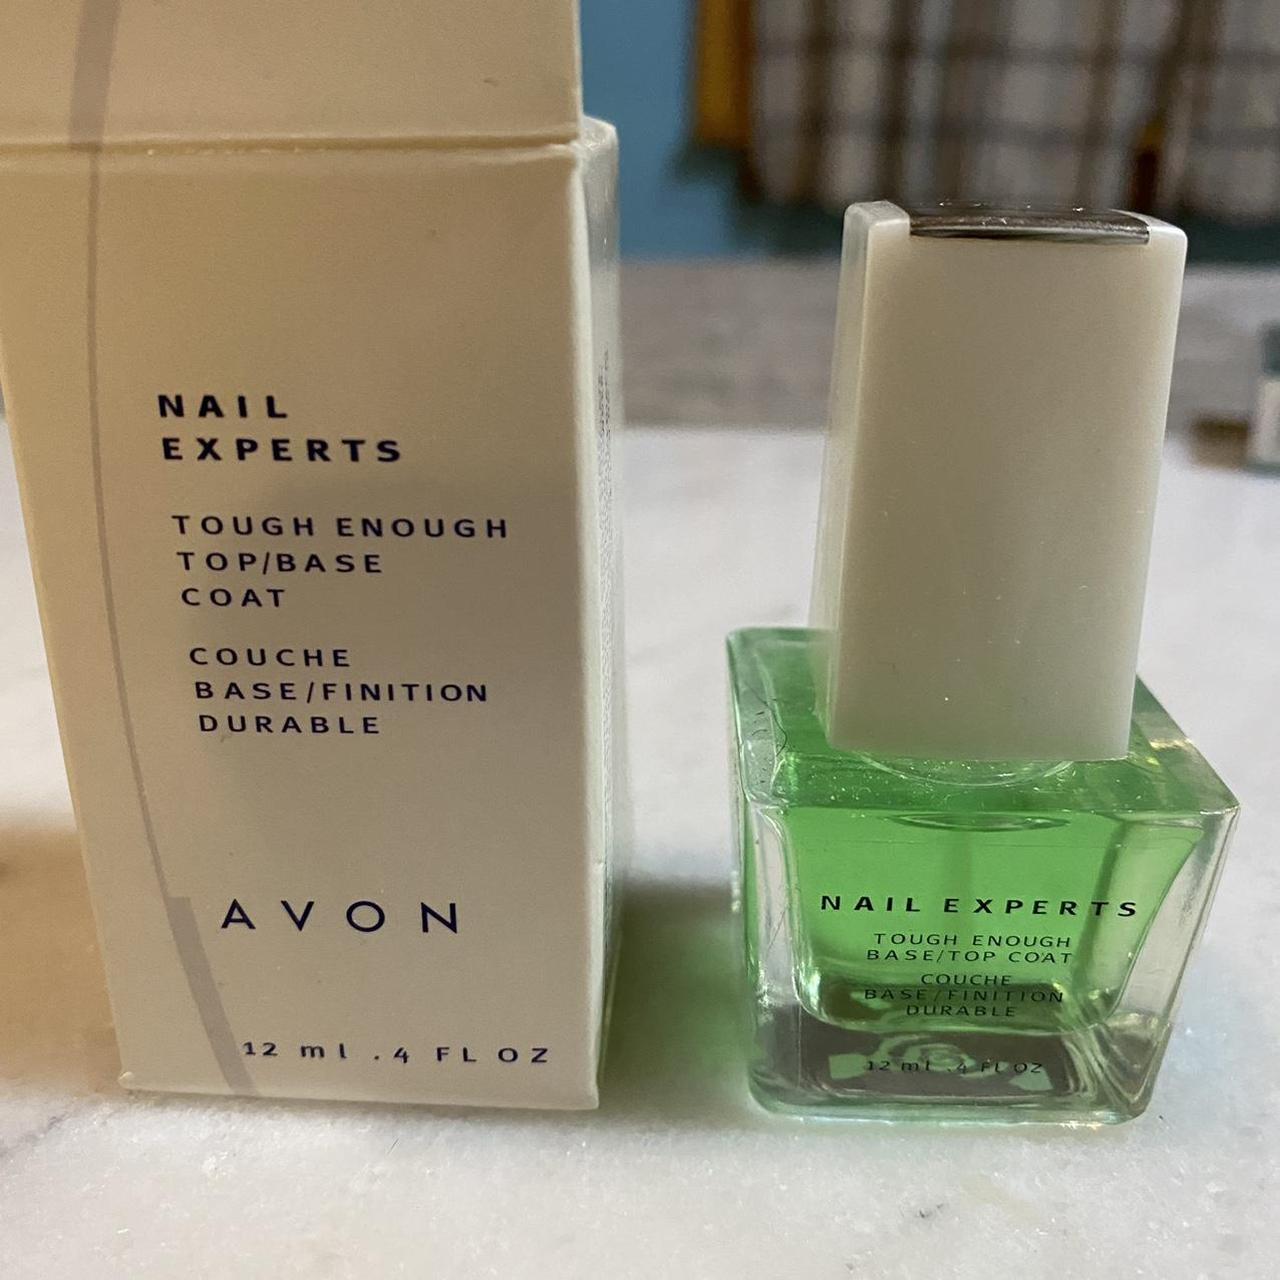 Avon Nail Expert Liquid Freeze Nail Dry 0.4 Fl Oz -New in Box -Rare find! |  eBay